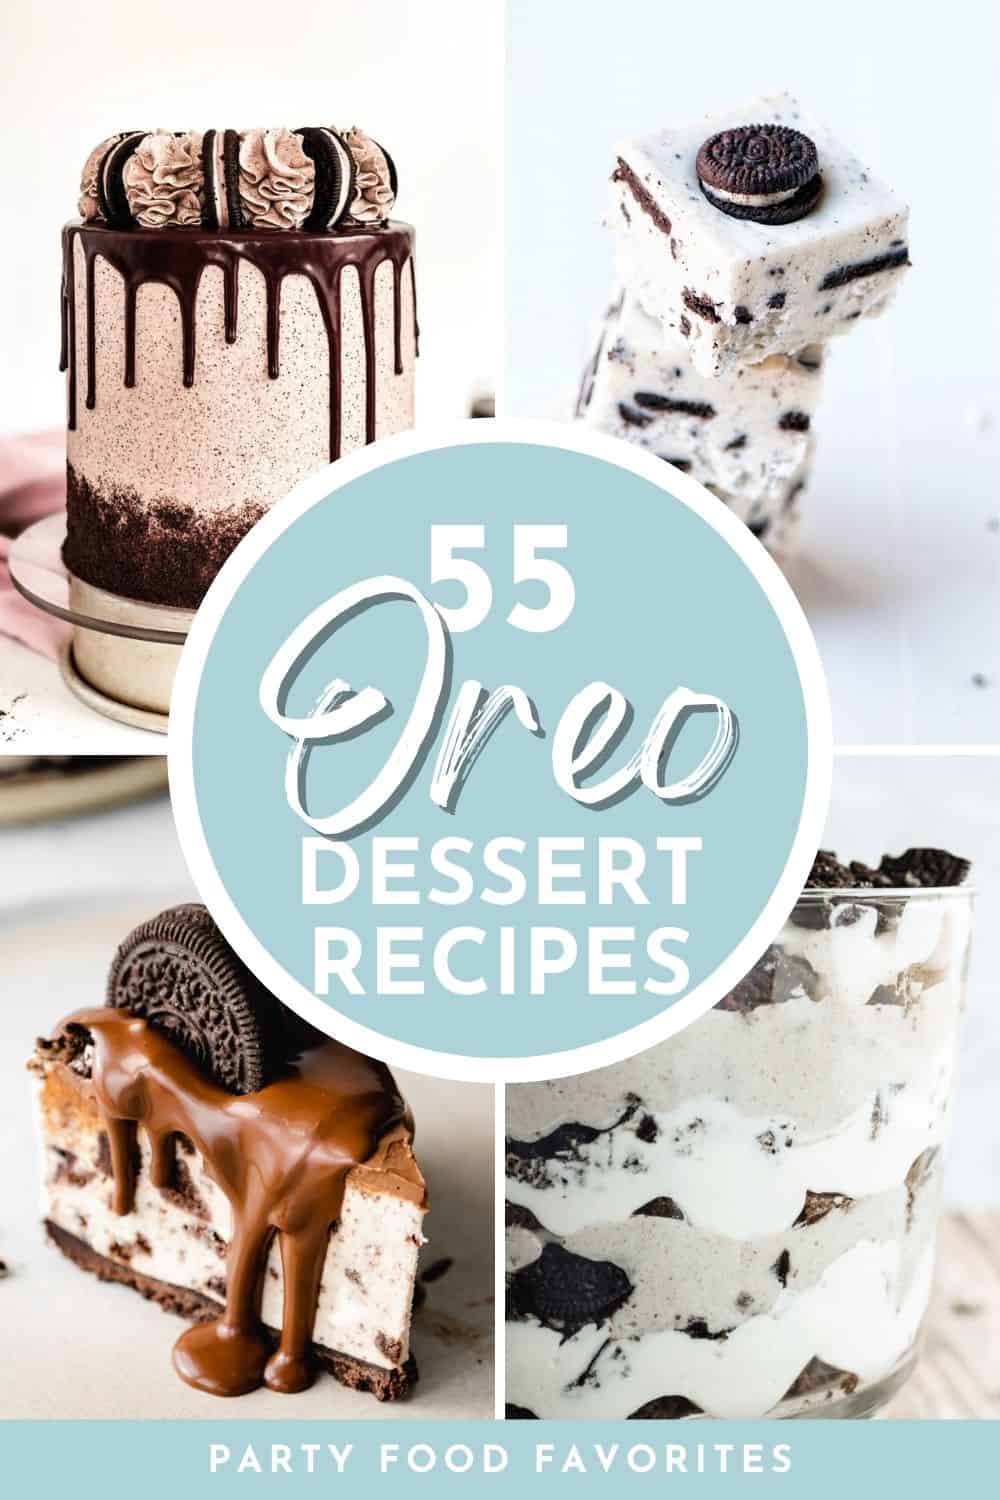 easy oreo dessert recipes roundup